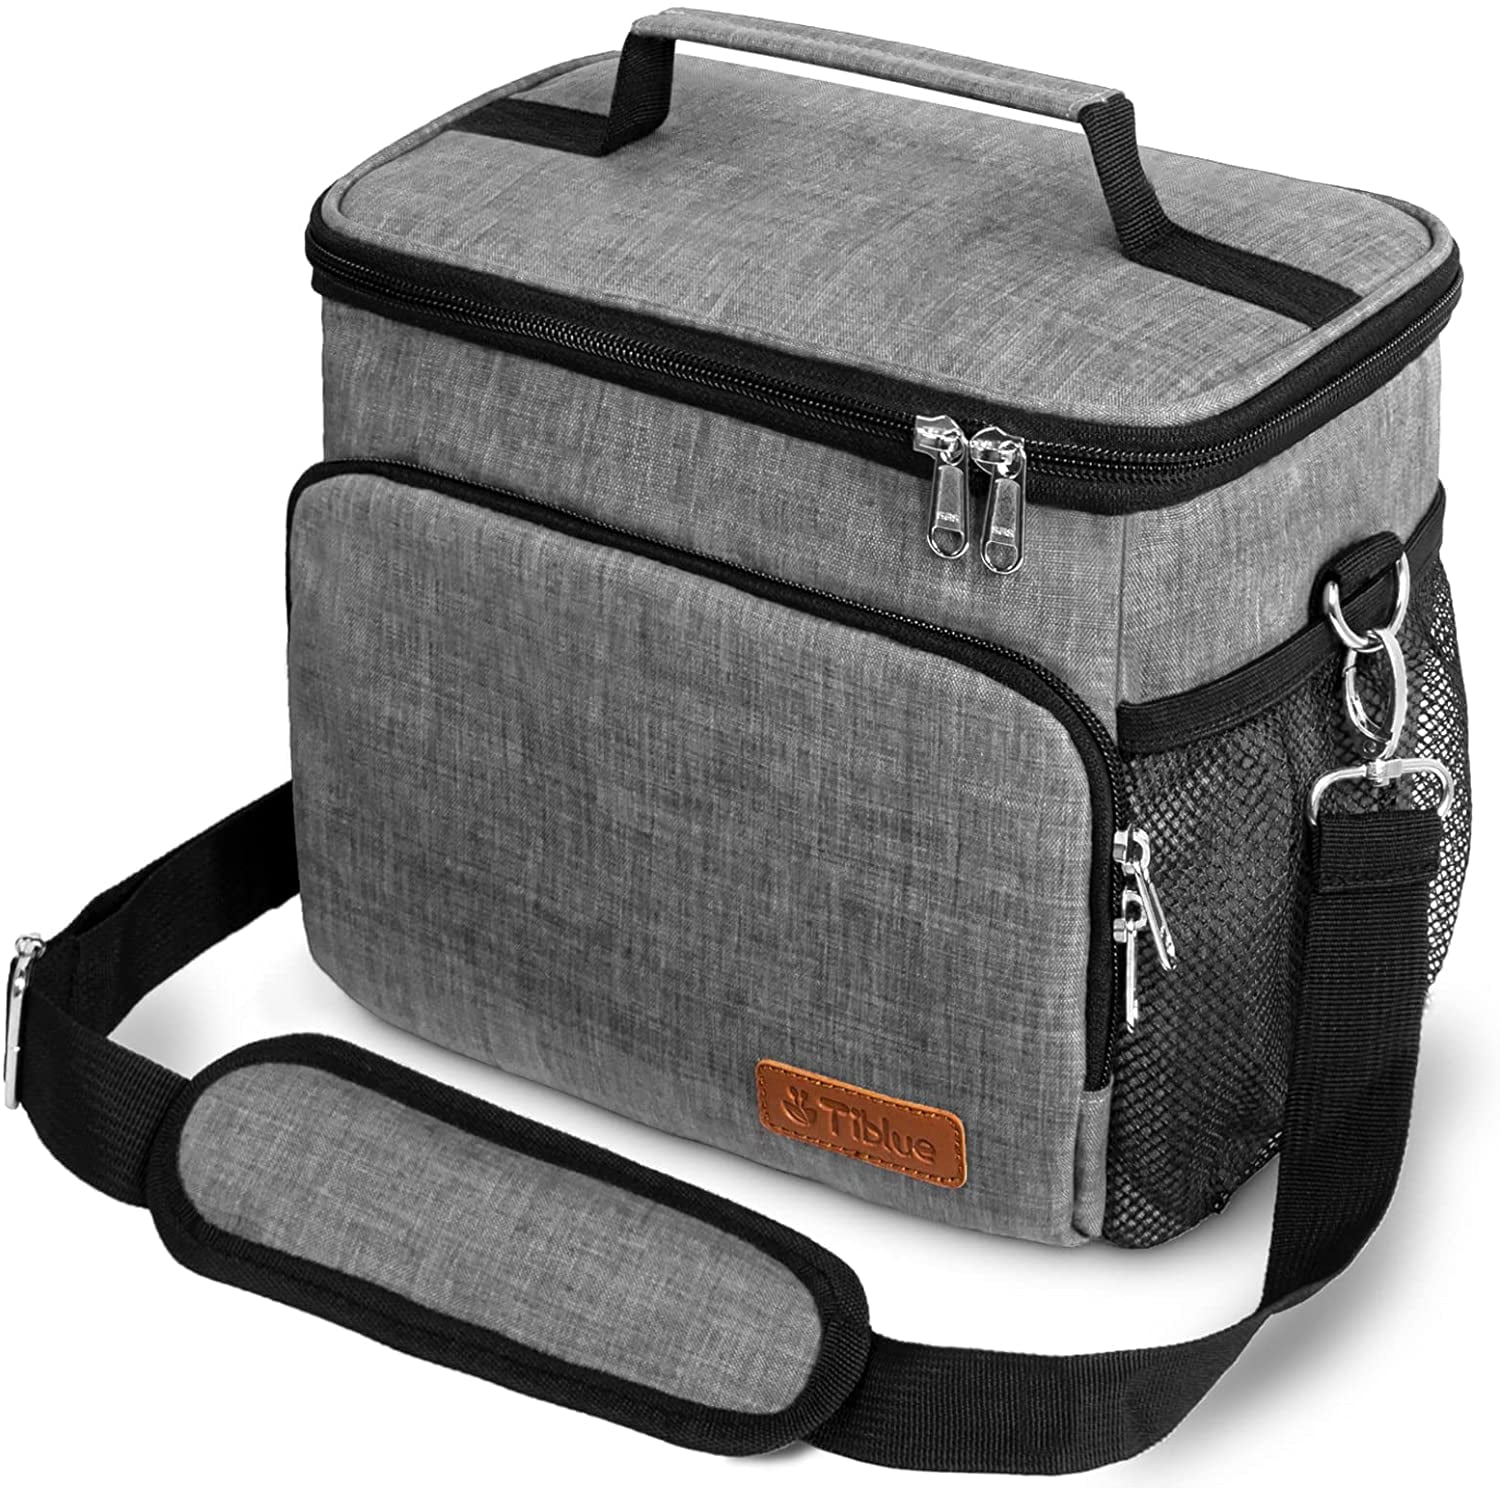 Lunch Backpack, Insulated Cooler Backpack Lunch Box for Men Women, 15. –  RUCYEN